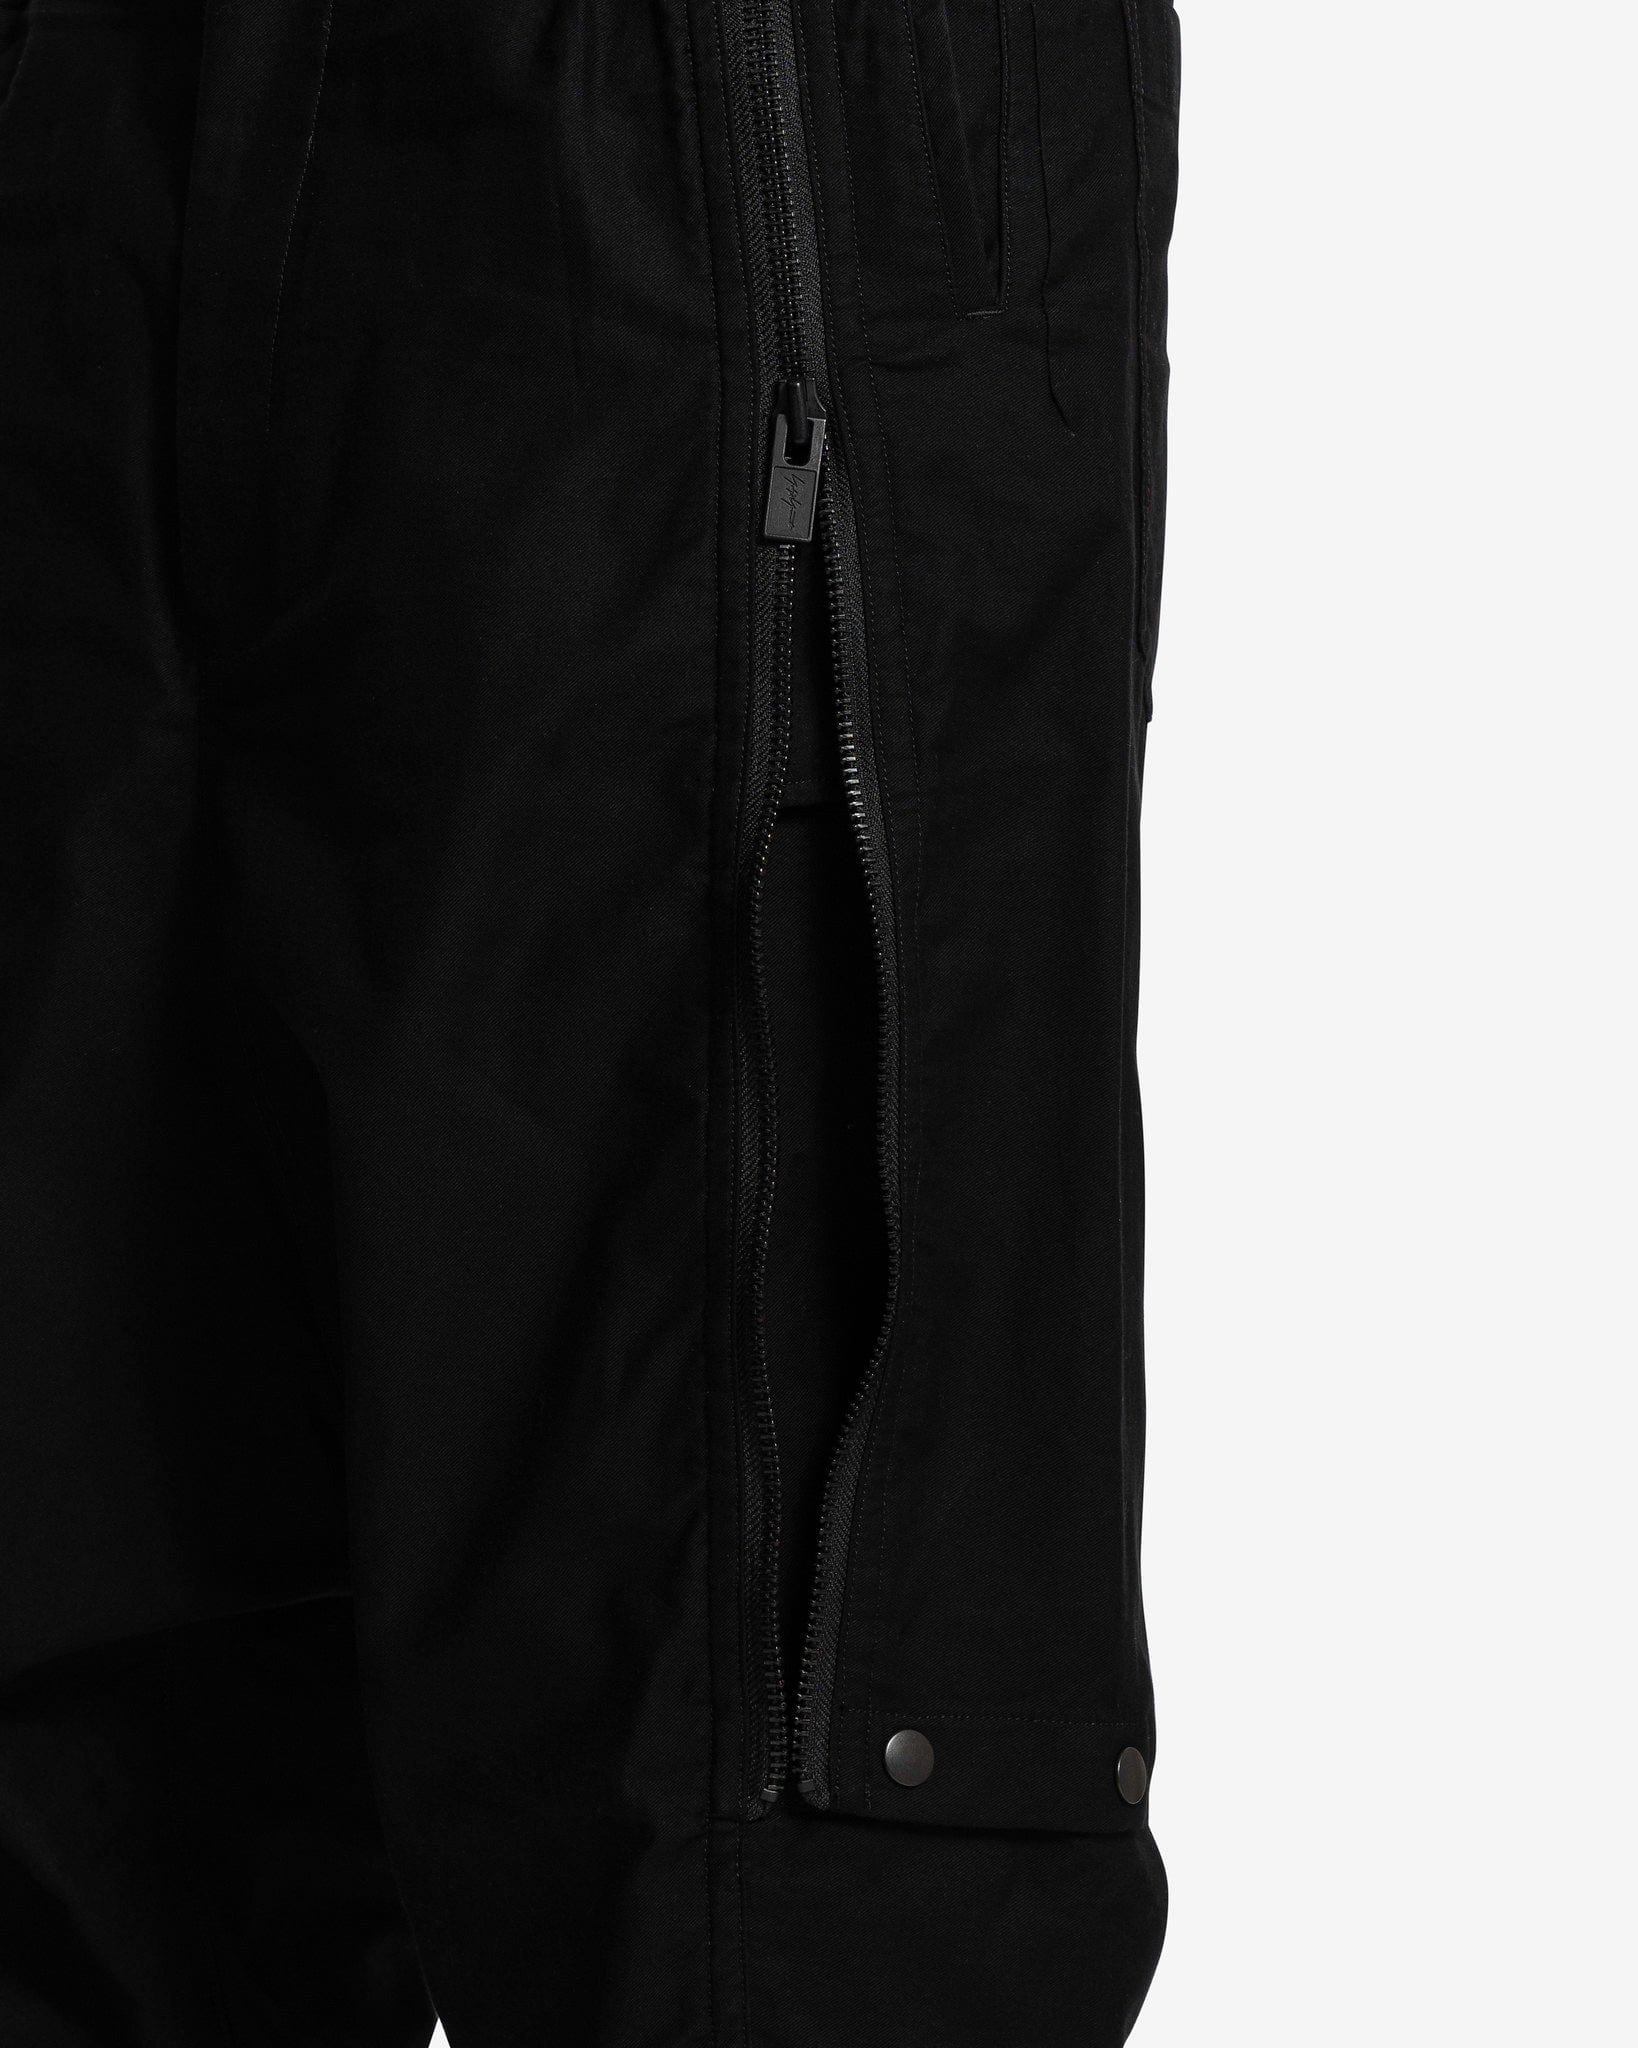 Yohji Yamamoto Pour Homme Men's Pants Cotton Twill Sarouel Pants with Zipper Details in Black